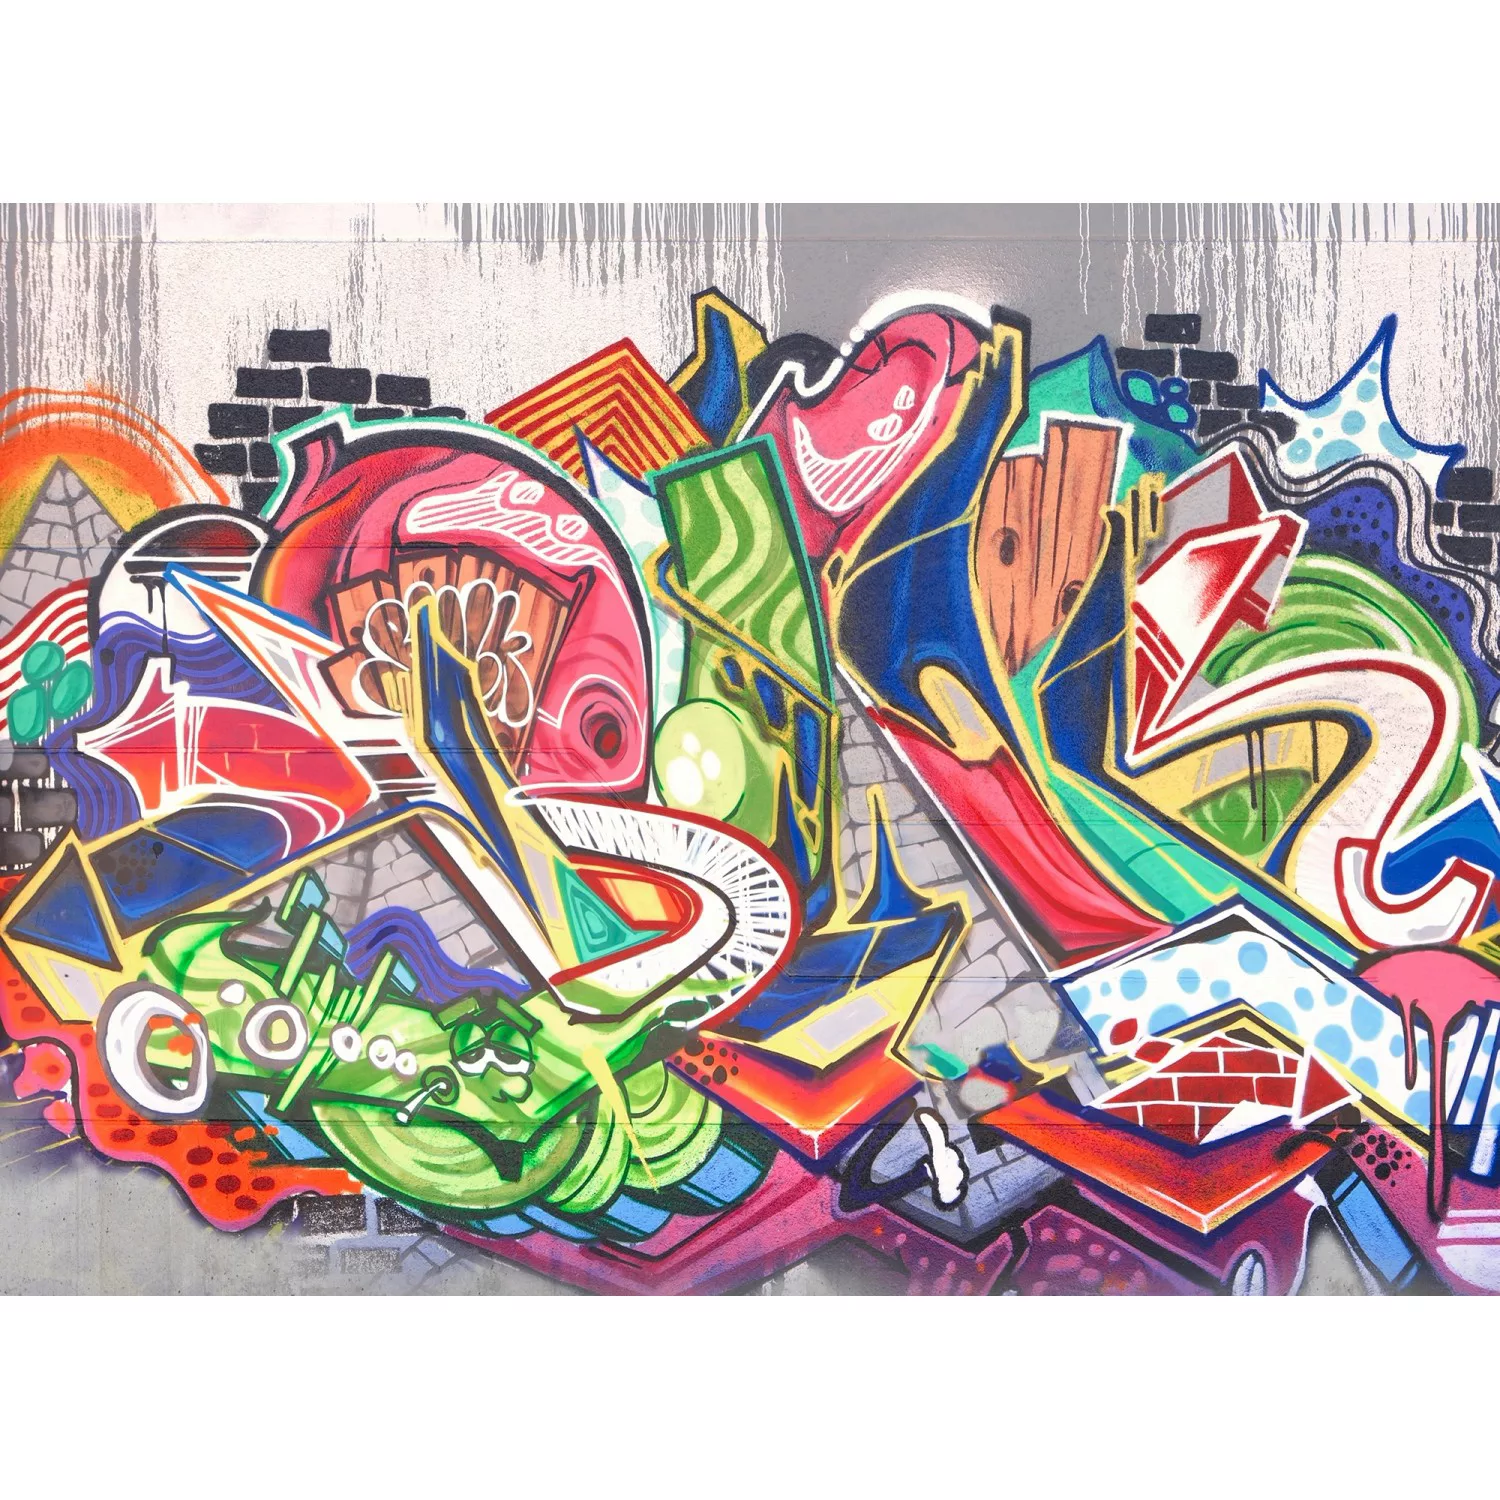 Fototapete Vliestapete Graffiti Bunt Grau Grün Rot Orange Blau 3,50x2,55 m günstig online kaufen